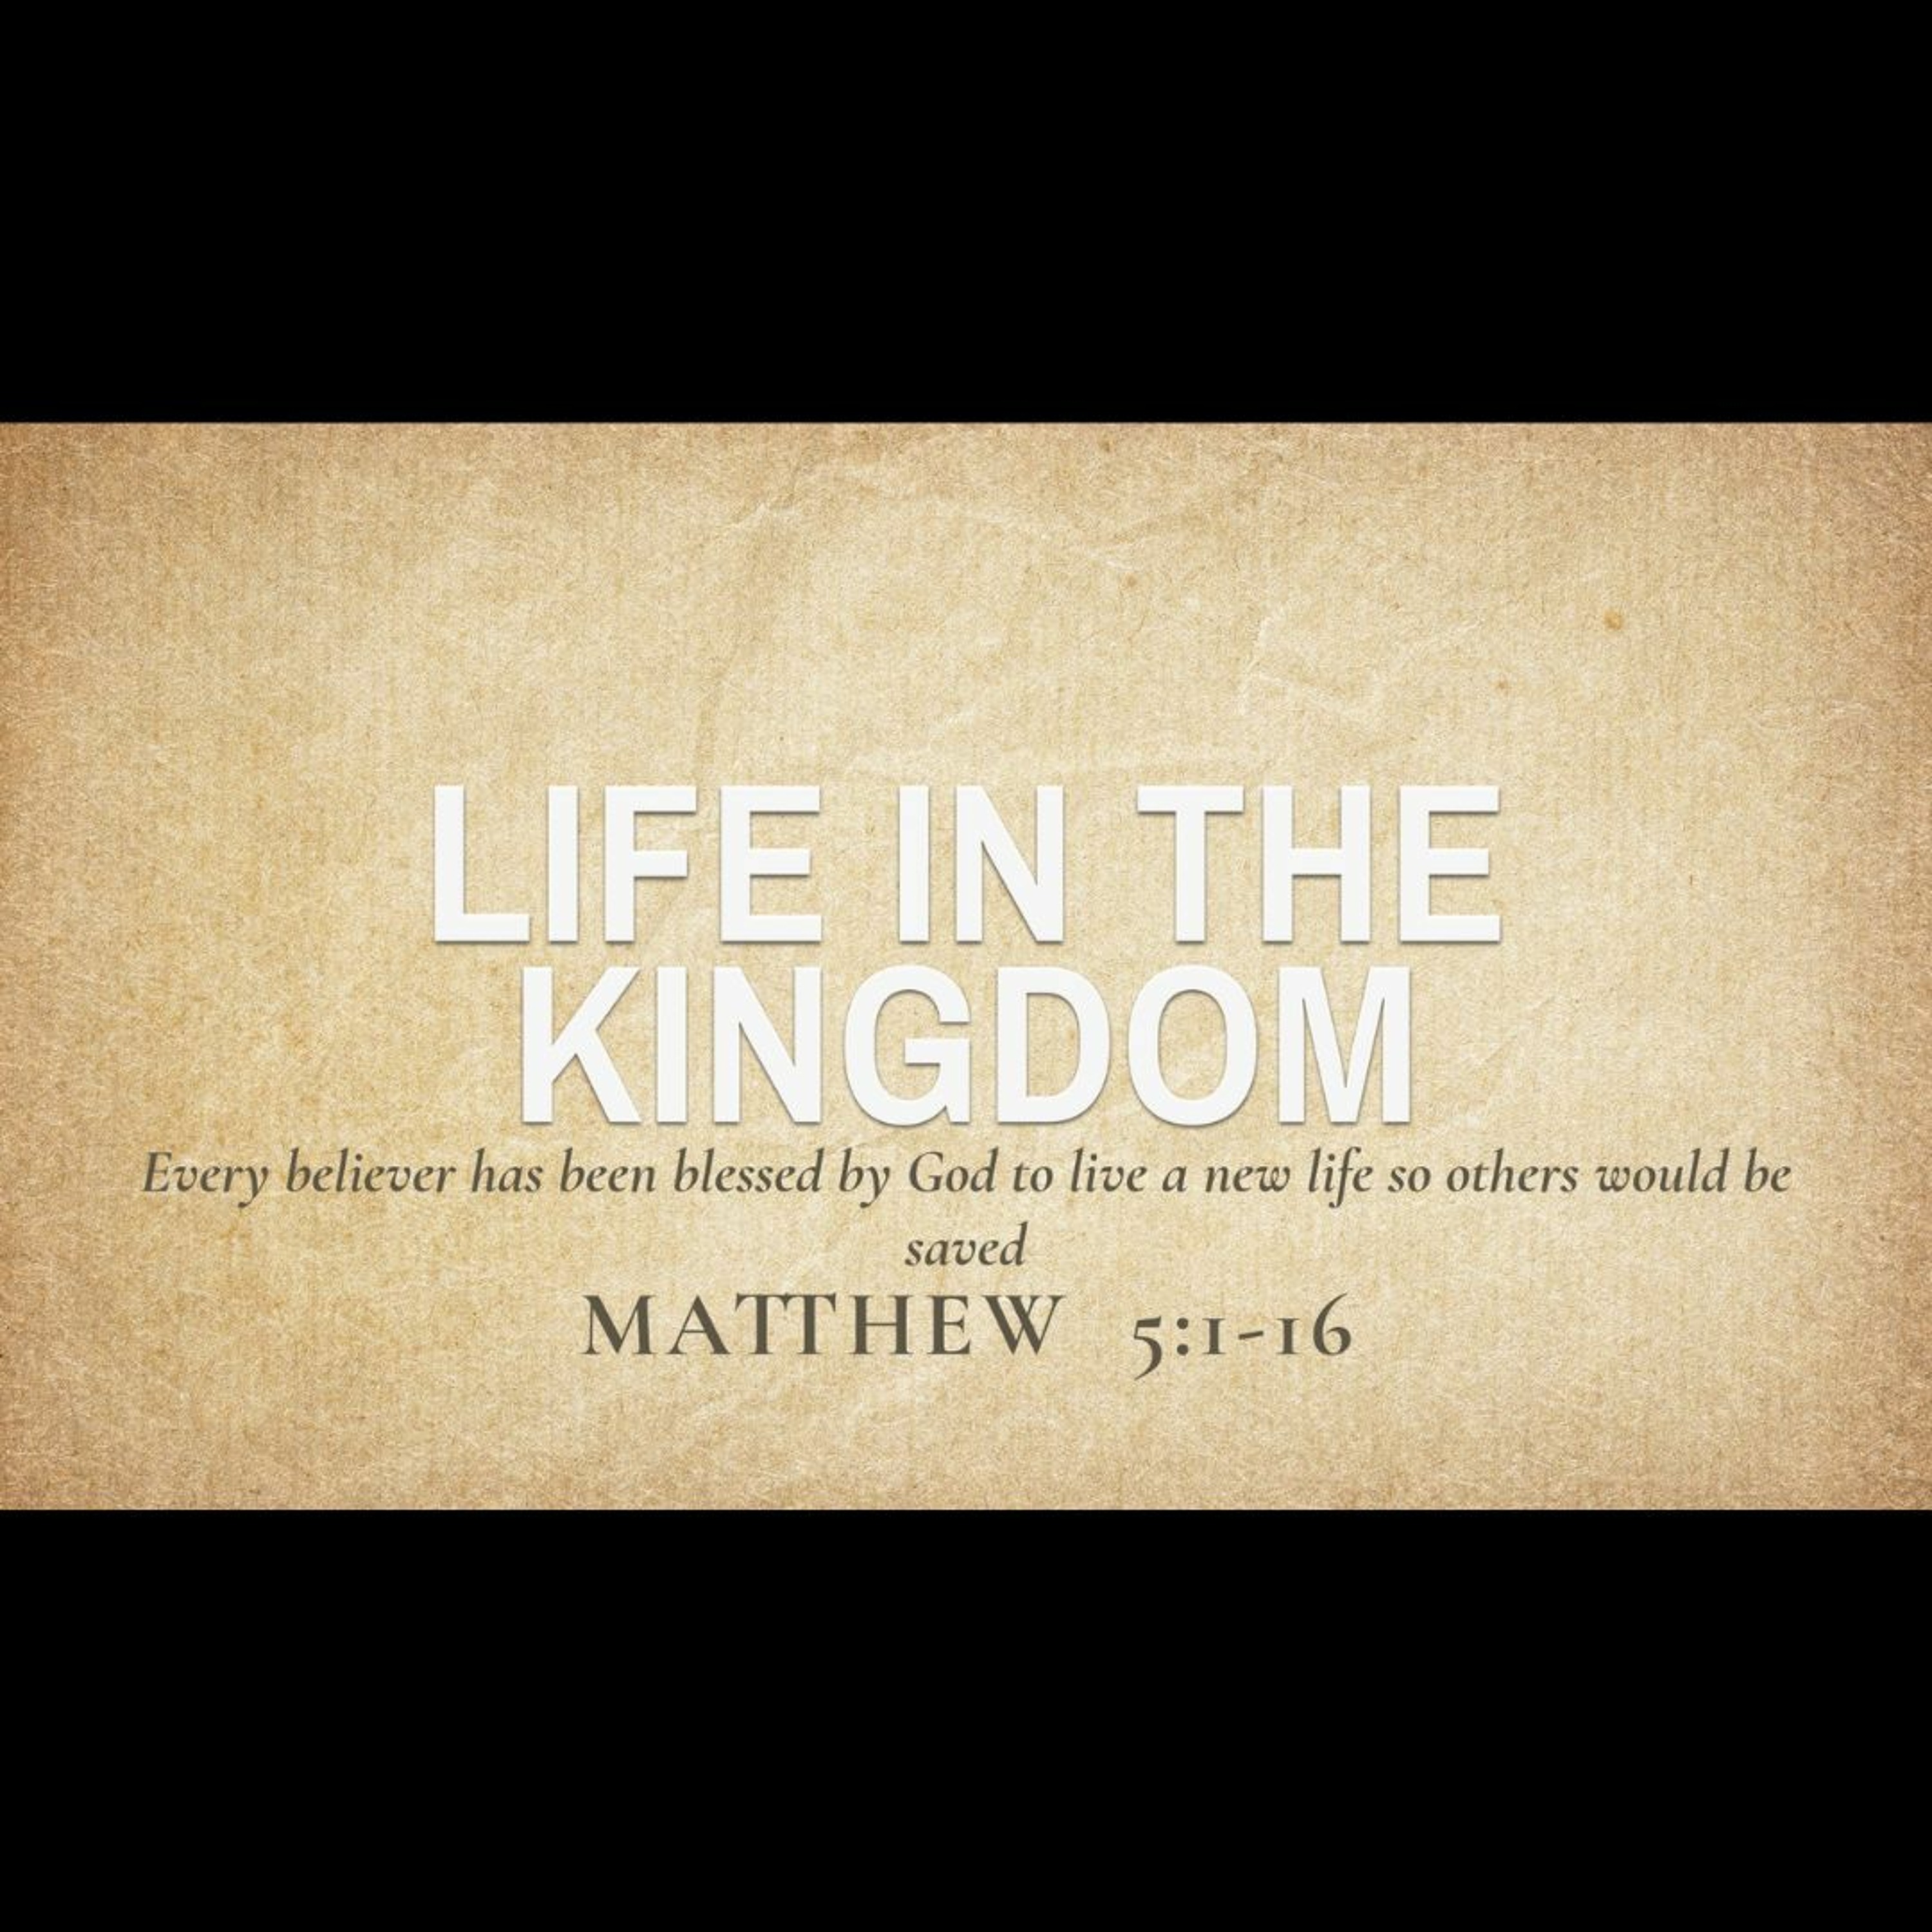 Life in the Kingdom (Matthew 5:1-16)